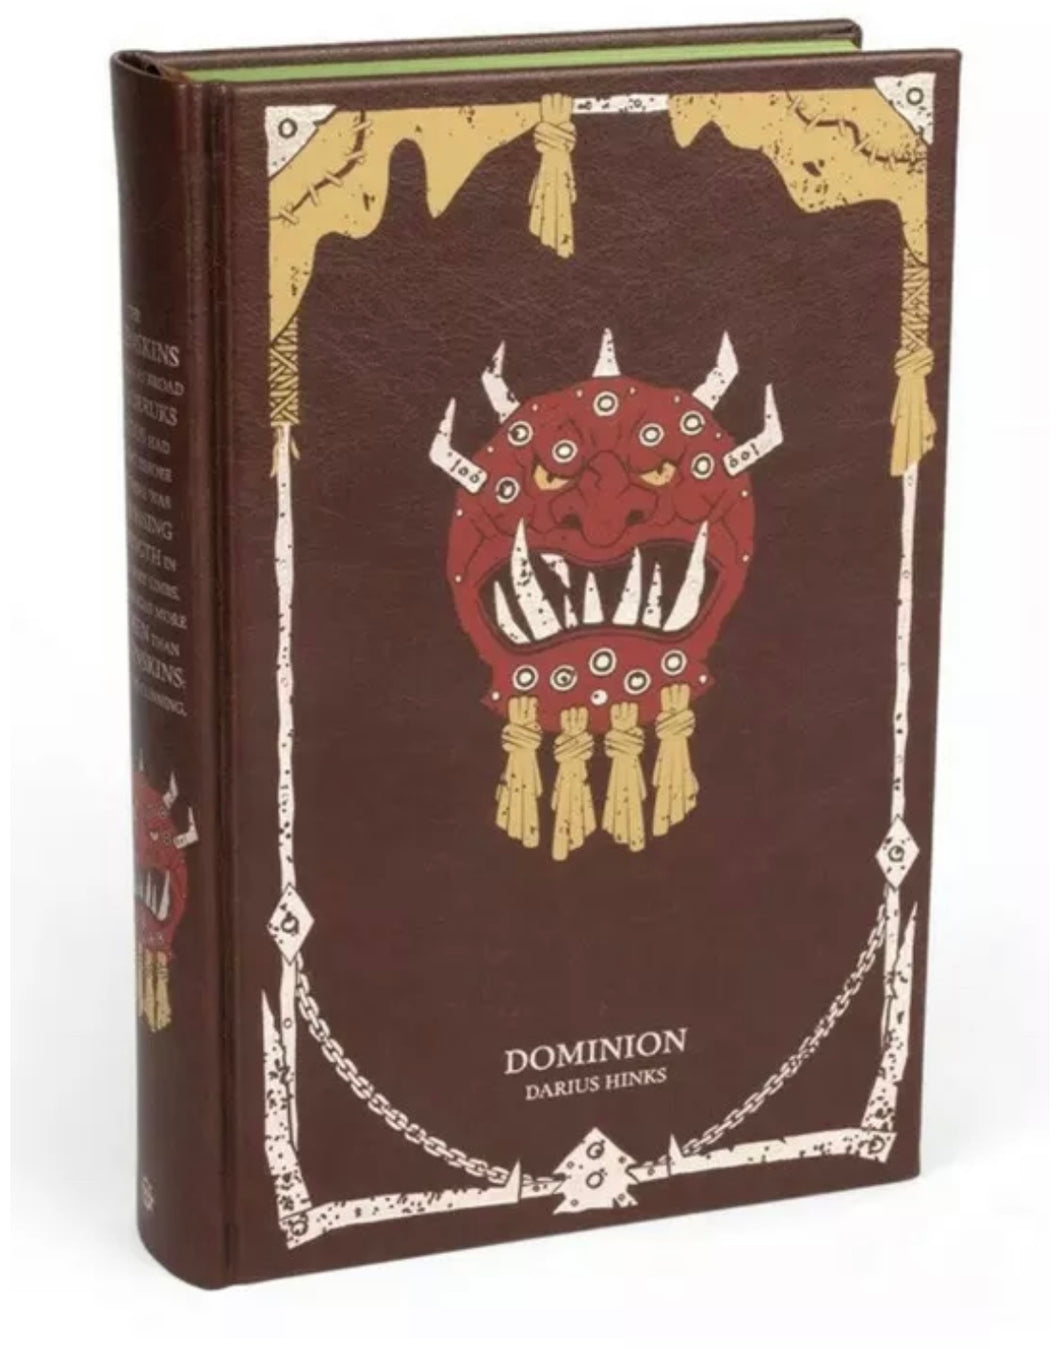 Dominion limited Edition Orruks cover